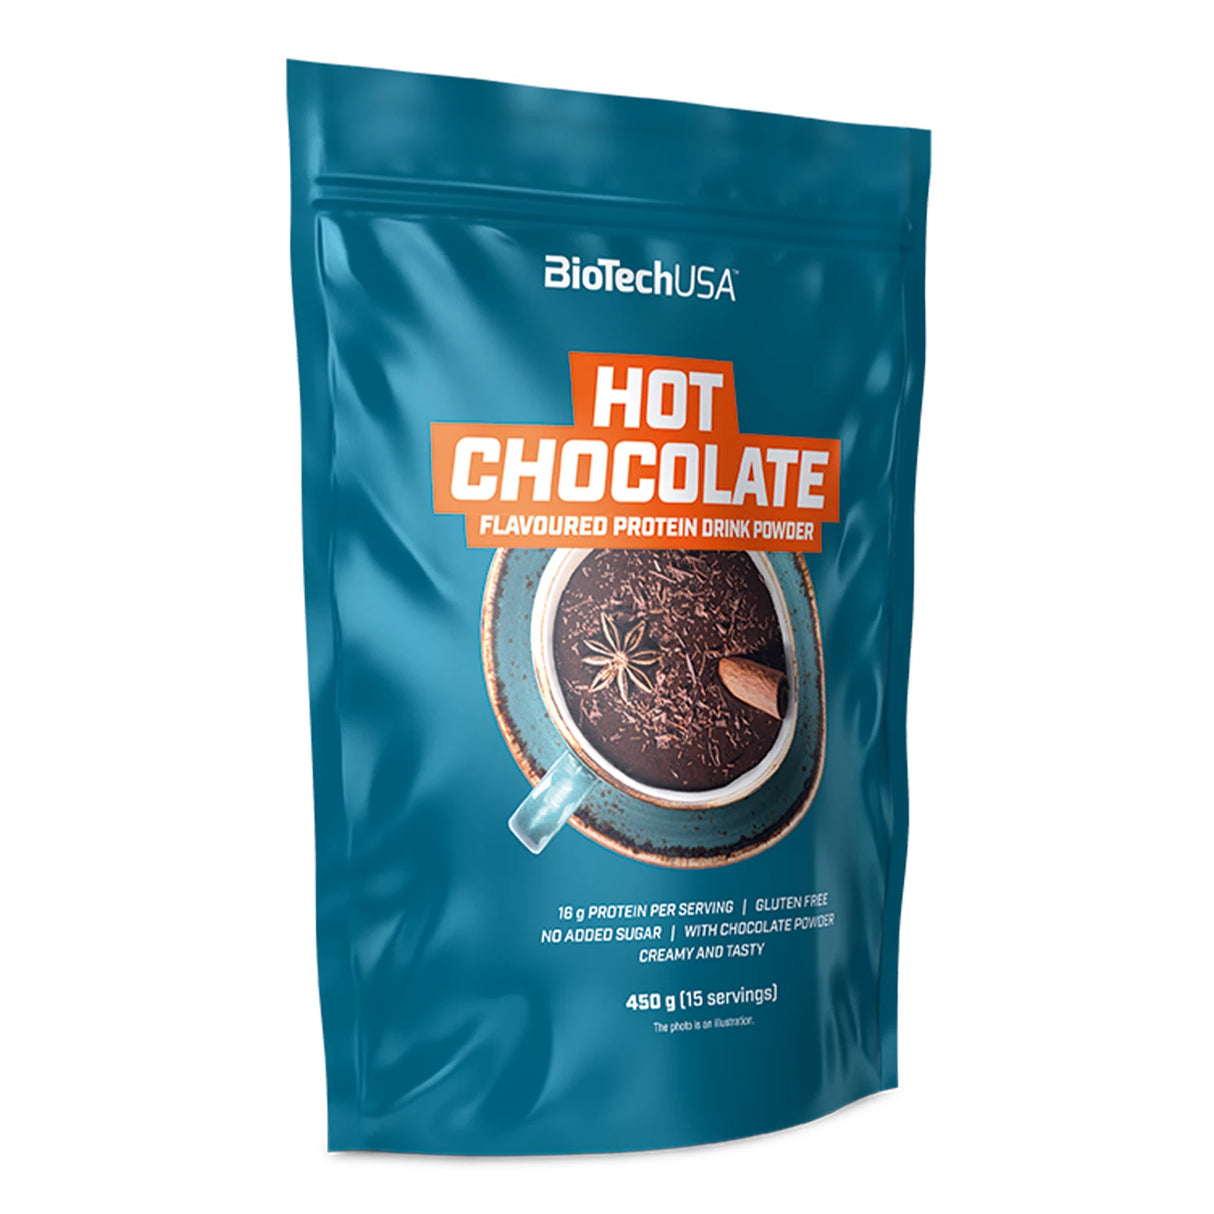 HOT CHOCOLATE - 450G BioTech USA